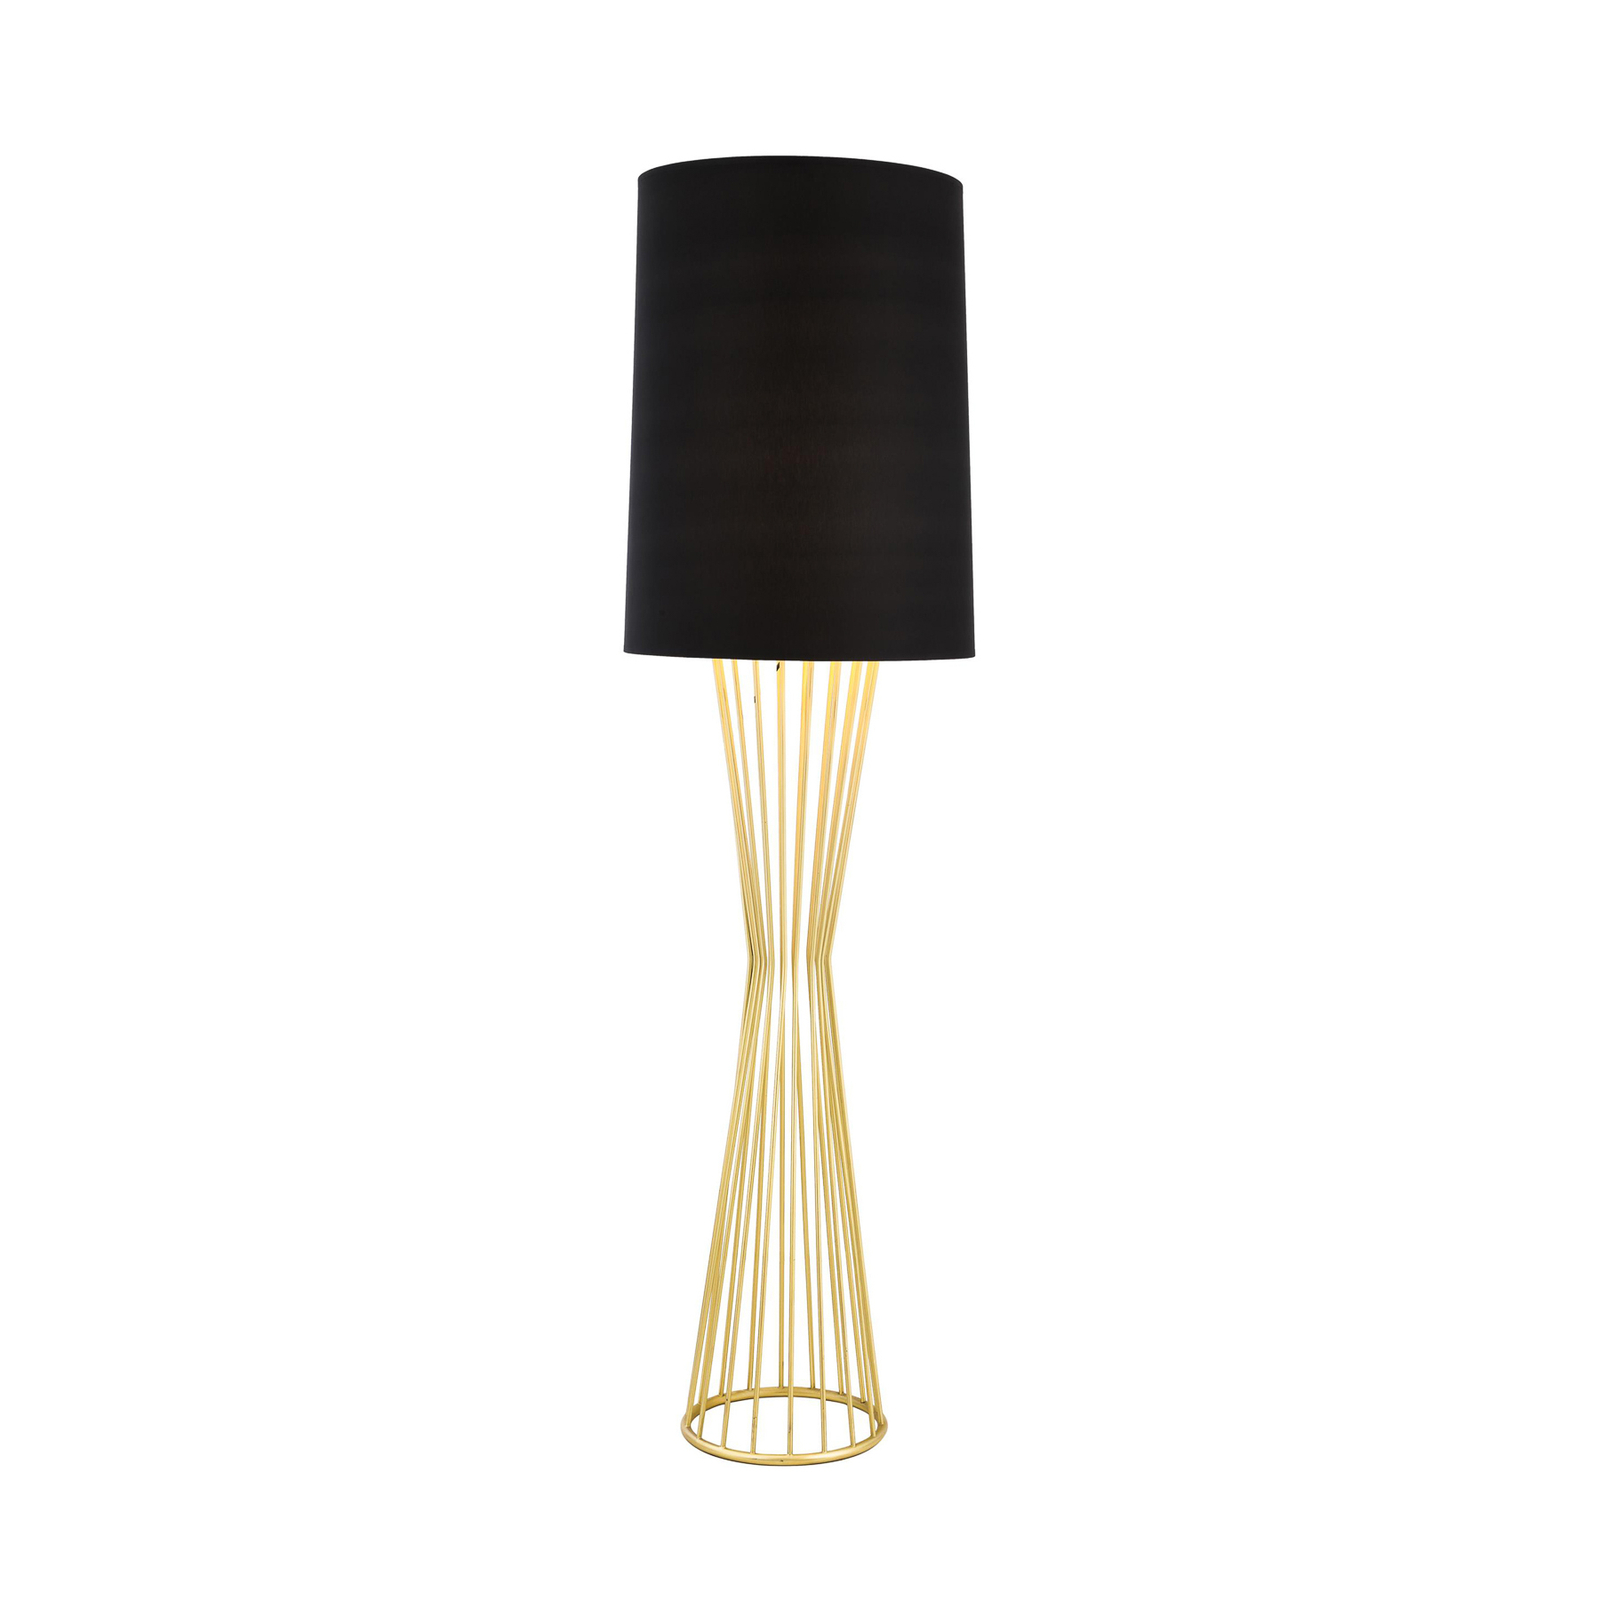 HLM-9073-1BSA floor lamp in gold and black